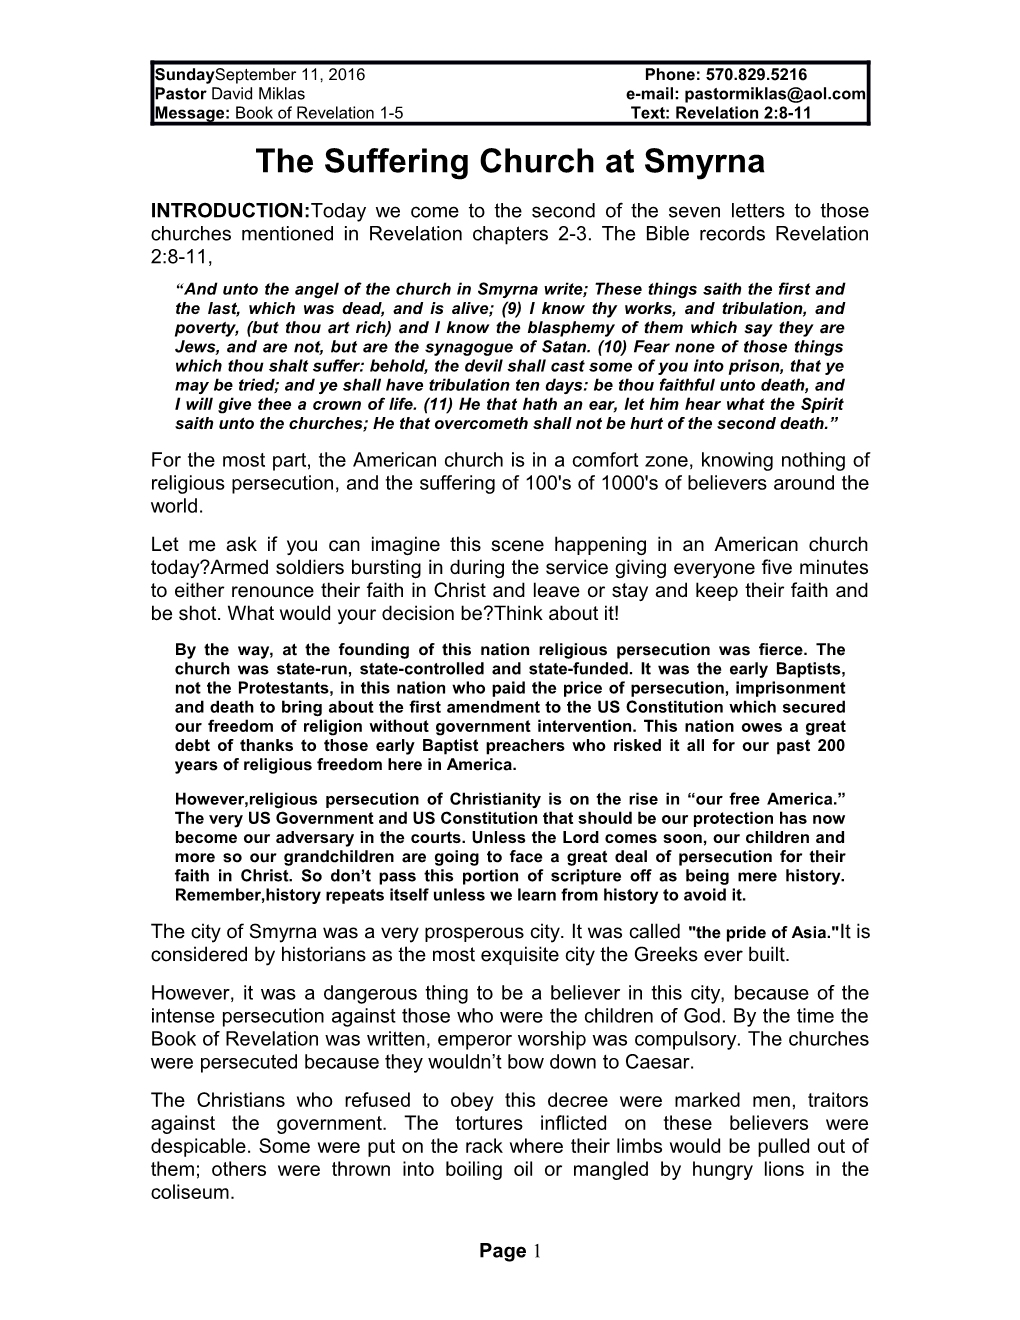 The Suffering Church